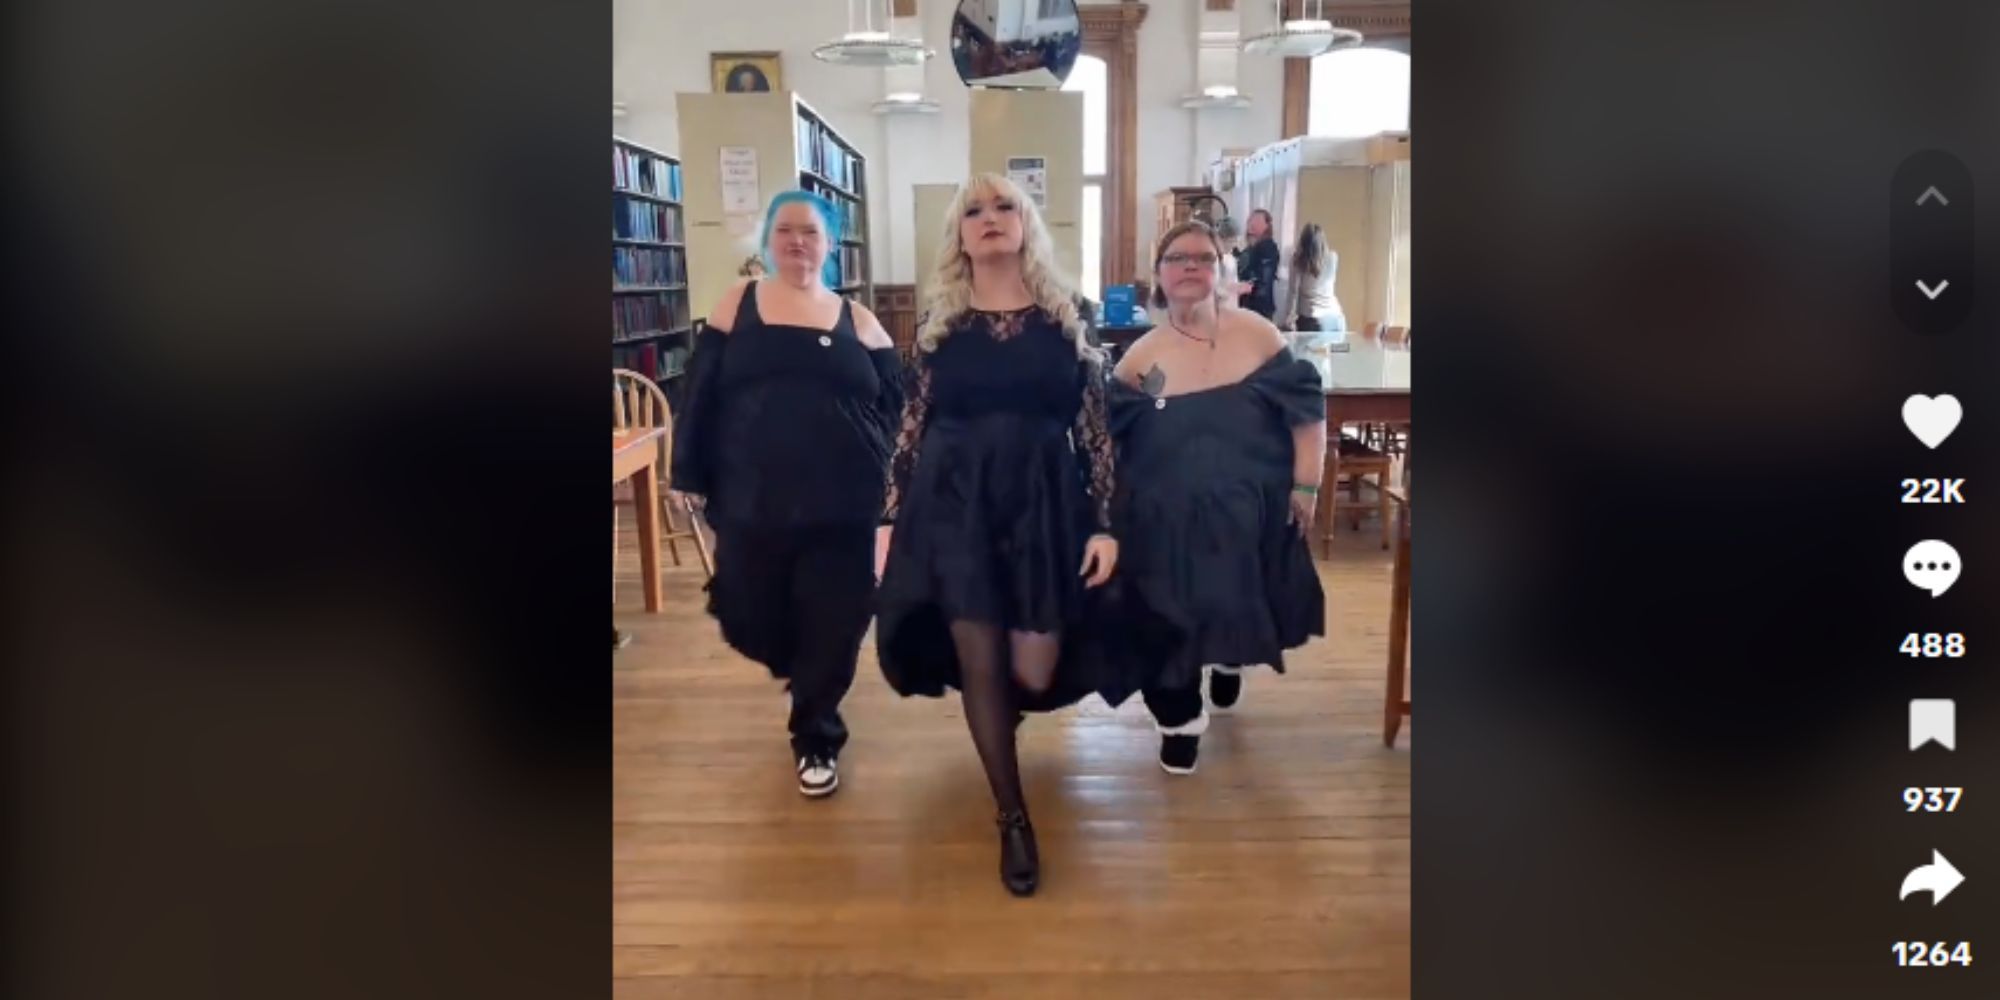 1000-lb Sisters amy slaton & tammy slaton & friend in all black catwalking at a library